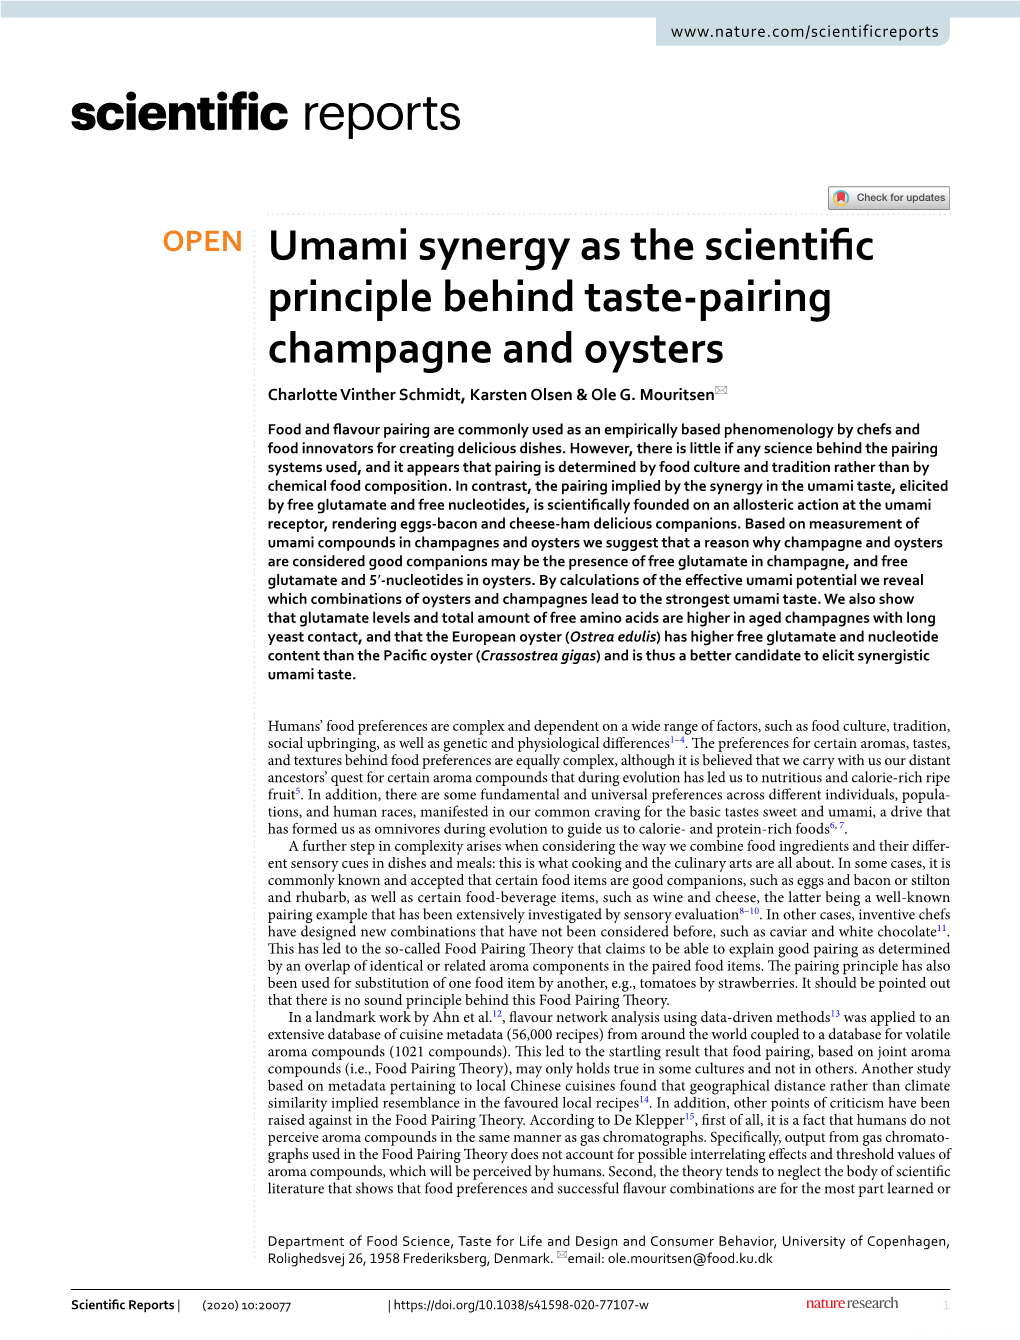 Umami Synergy As the Scientific Principle Behind Taste-Pairing